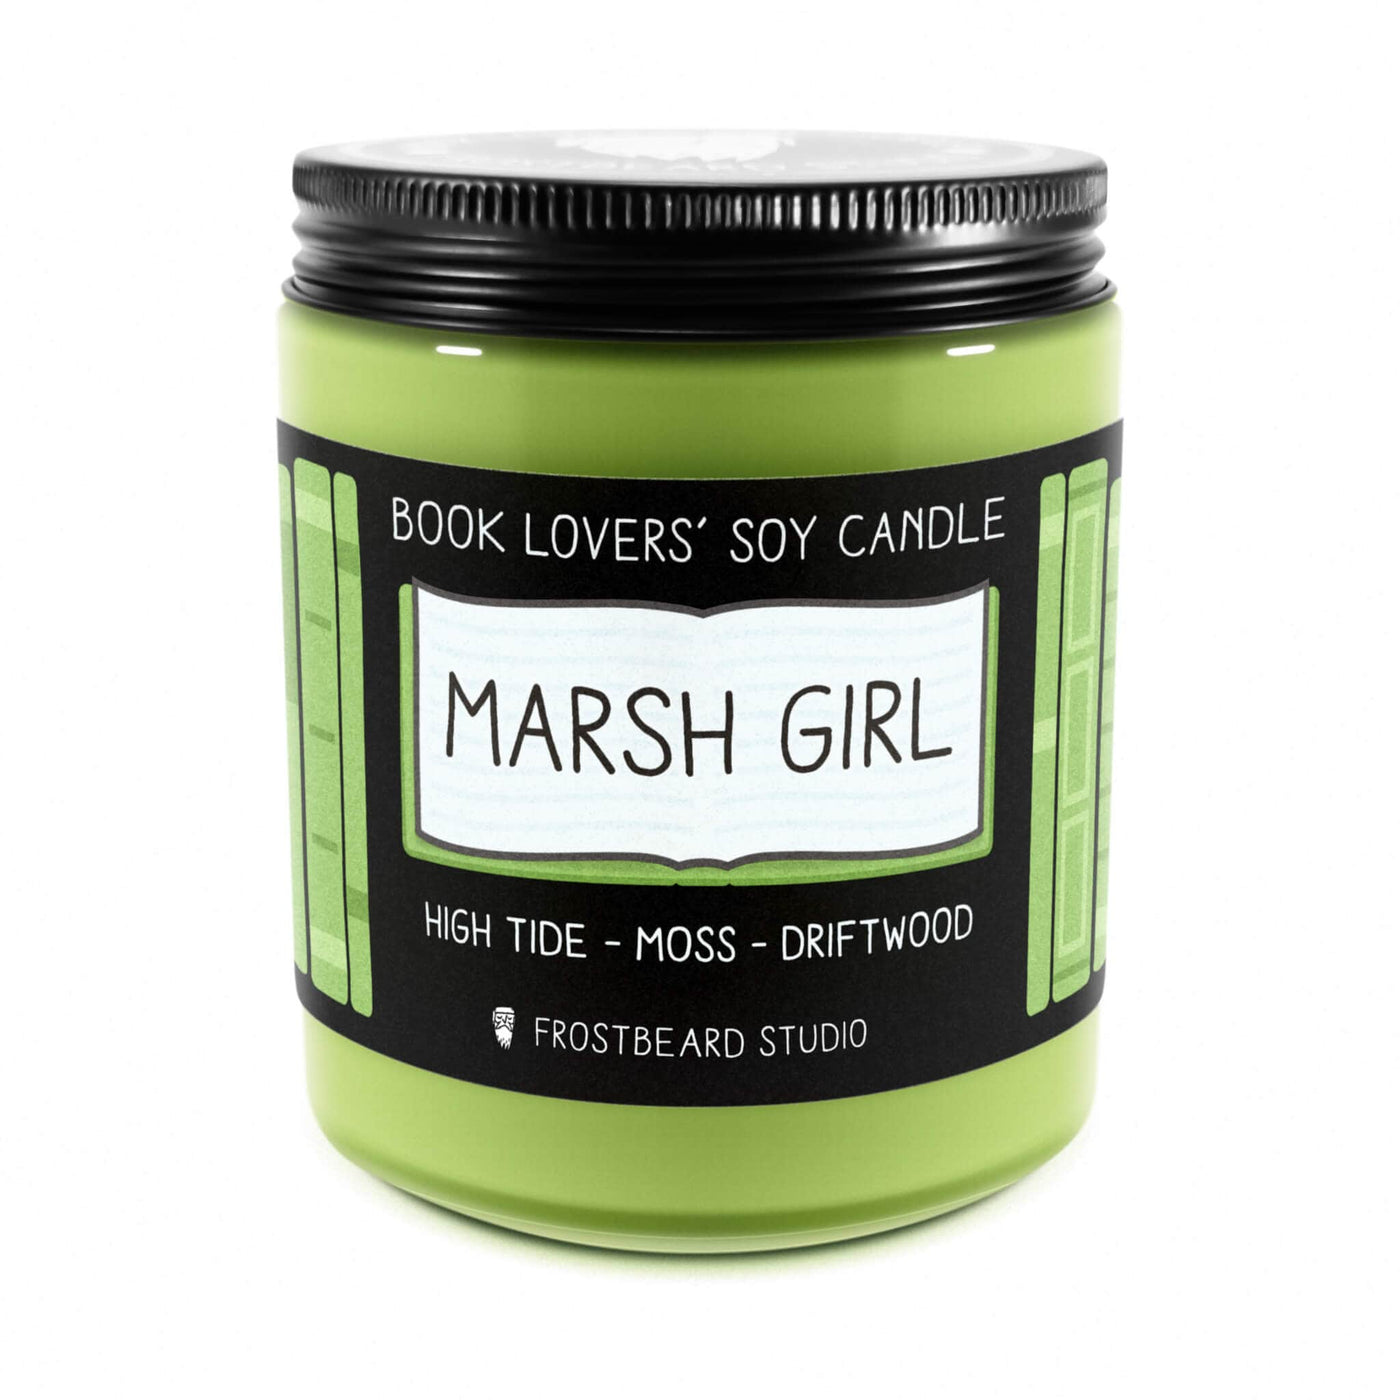 Marsh Girl  -  8 oz Jar  -  Book Lovers' Soy Candle  -  Frostbeard Studio